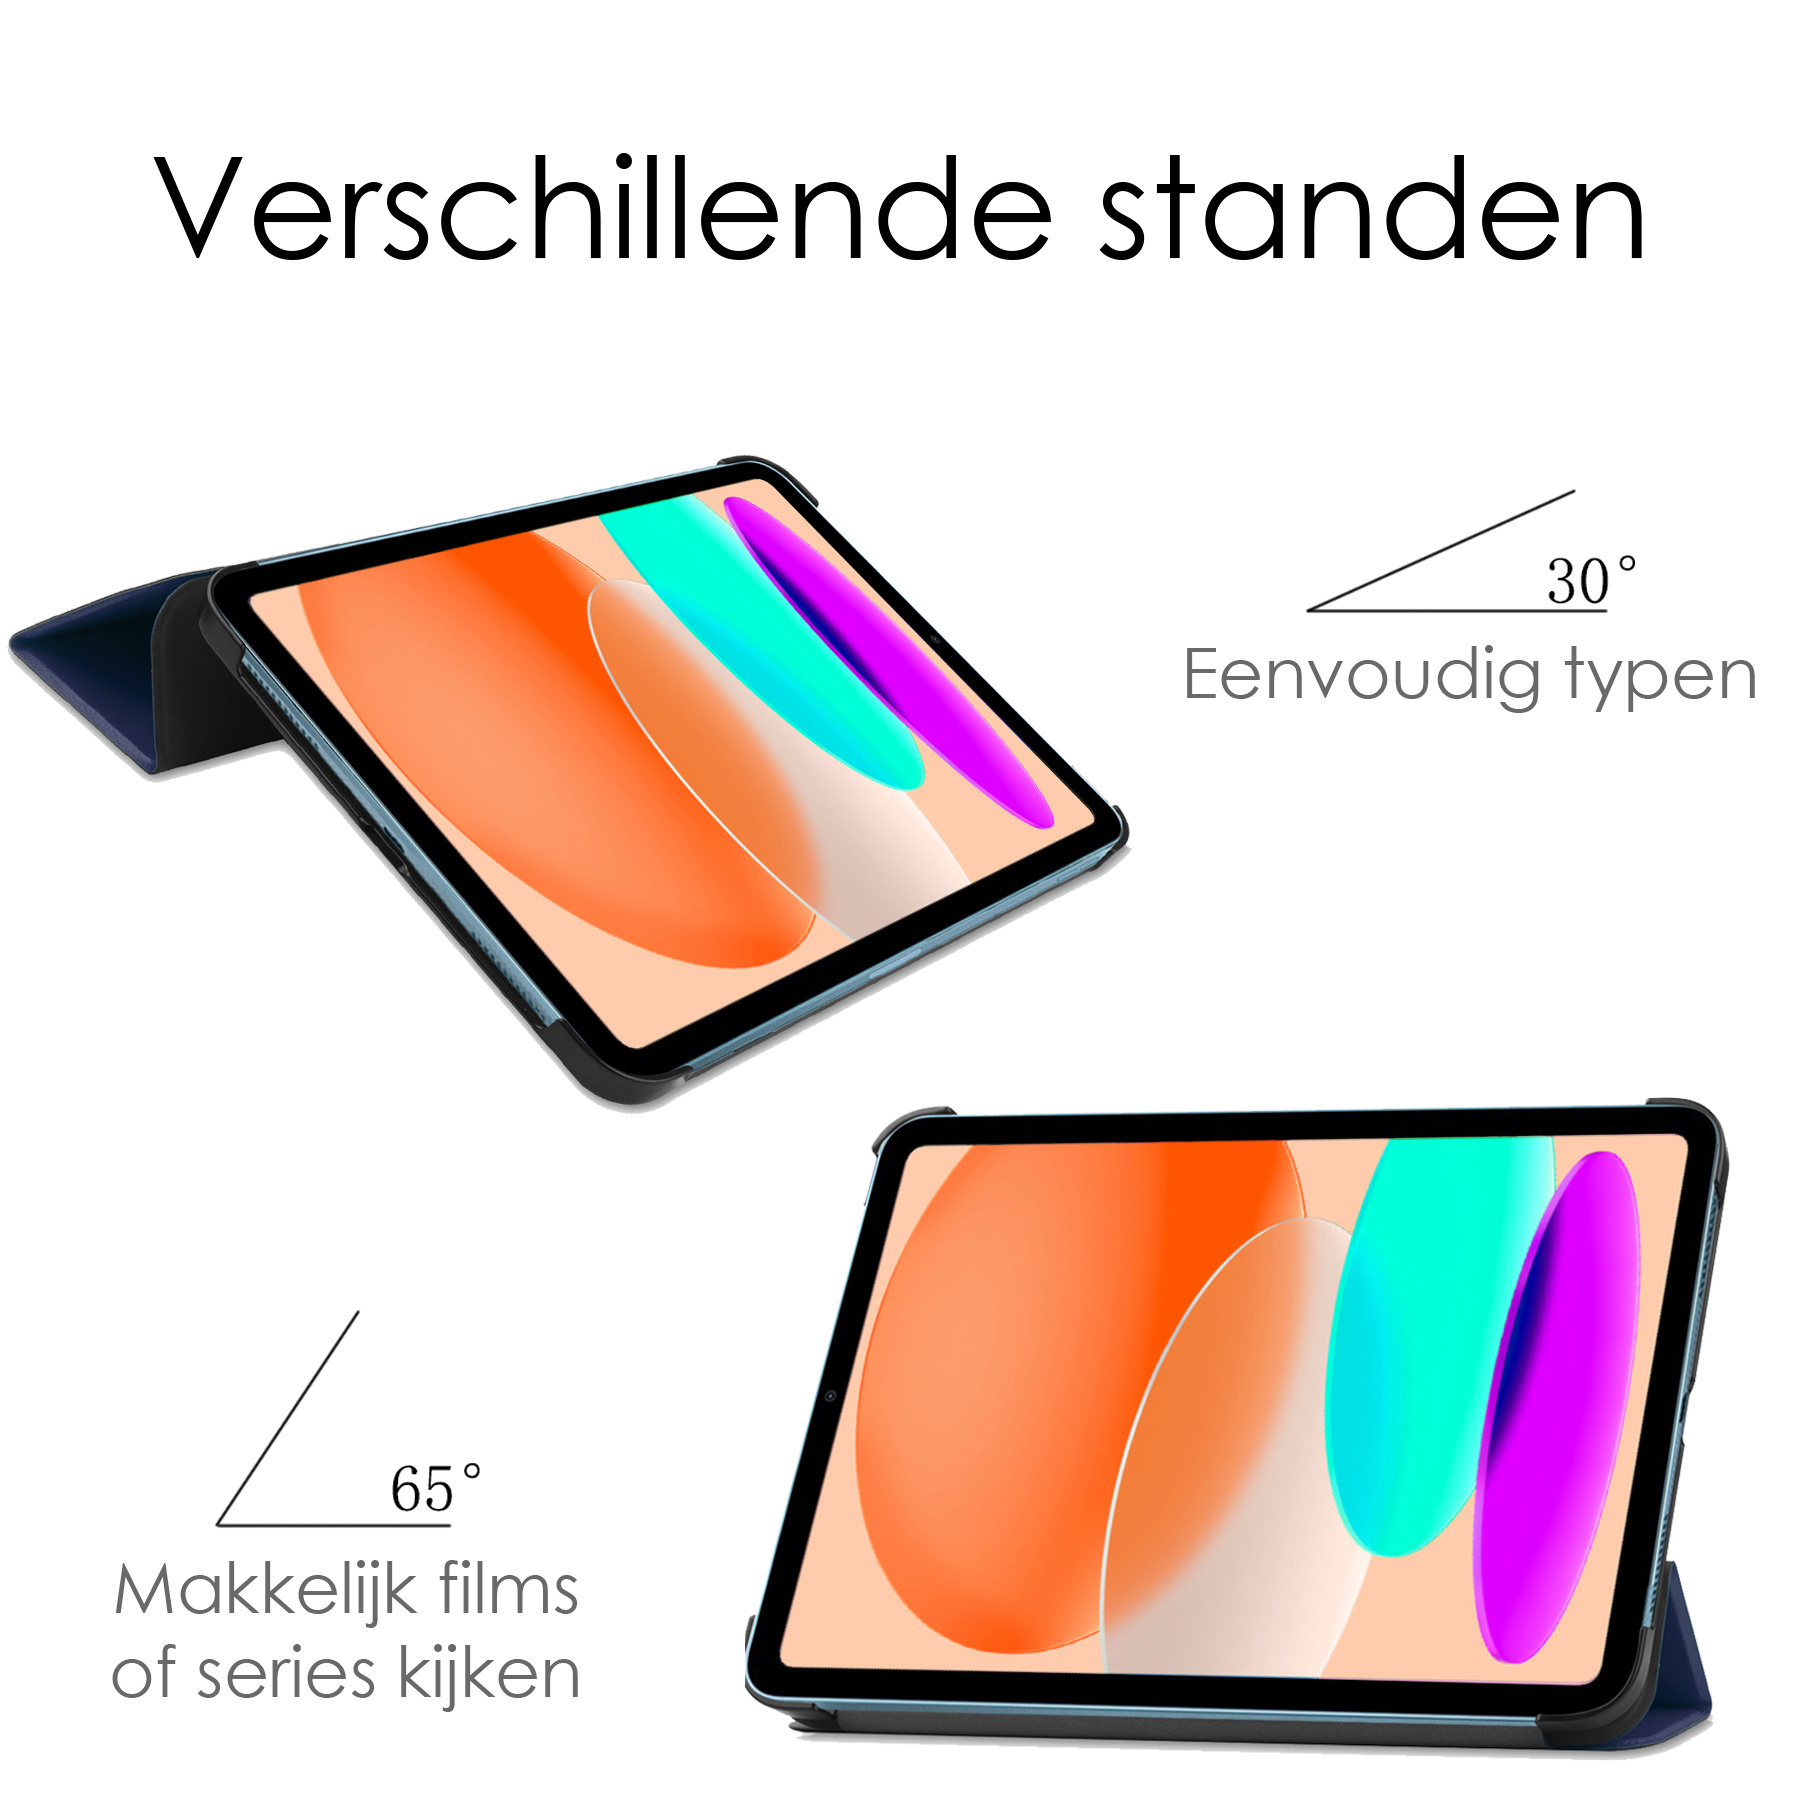 iPad 10 2022 Hoesje Hardcover Hoes Book Case - Donker Blauw